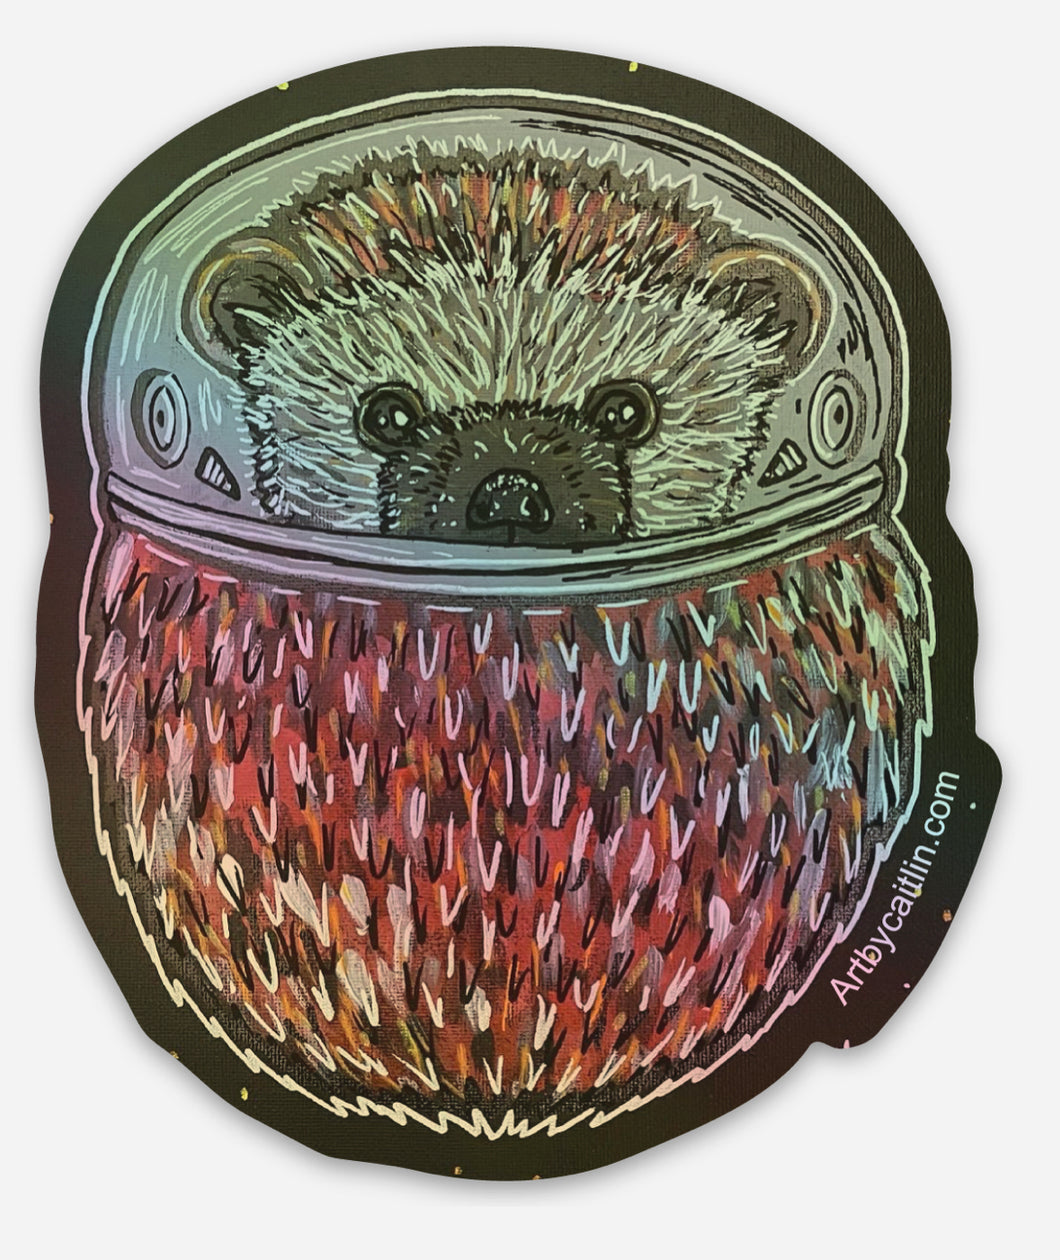 Space hedgehog sticker